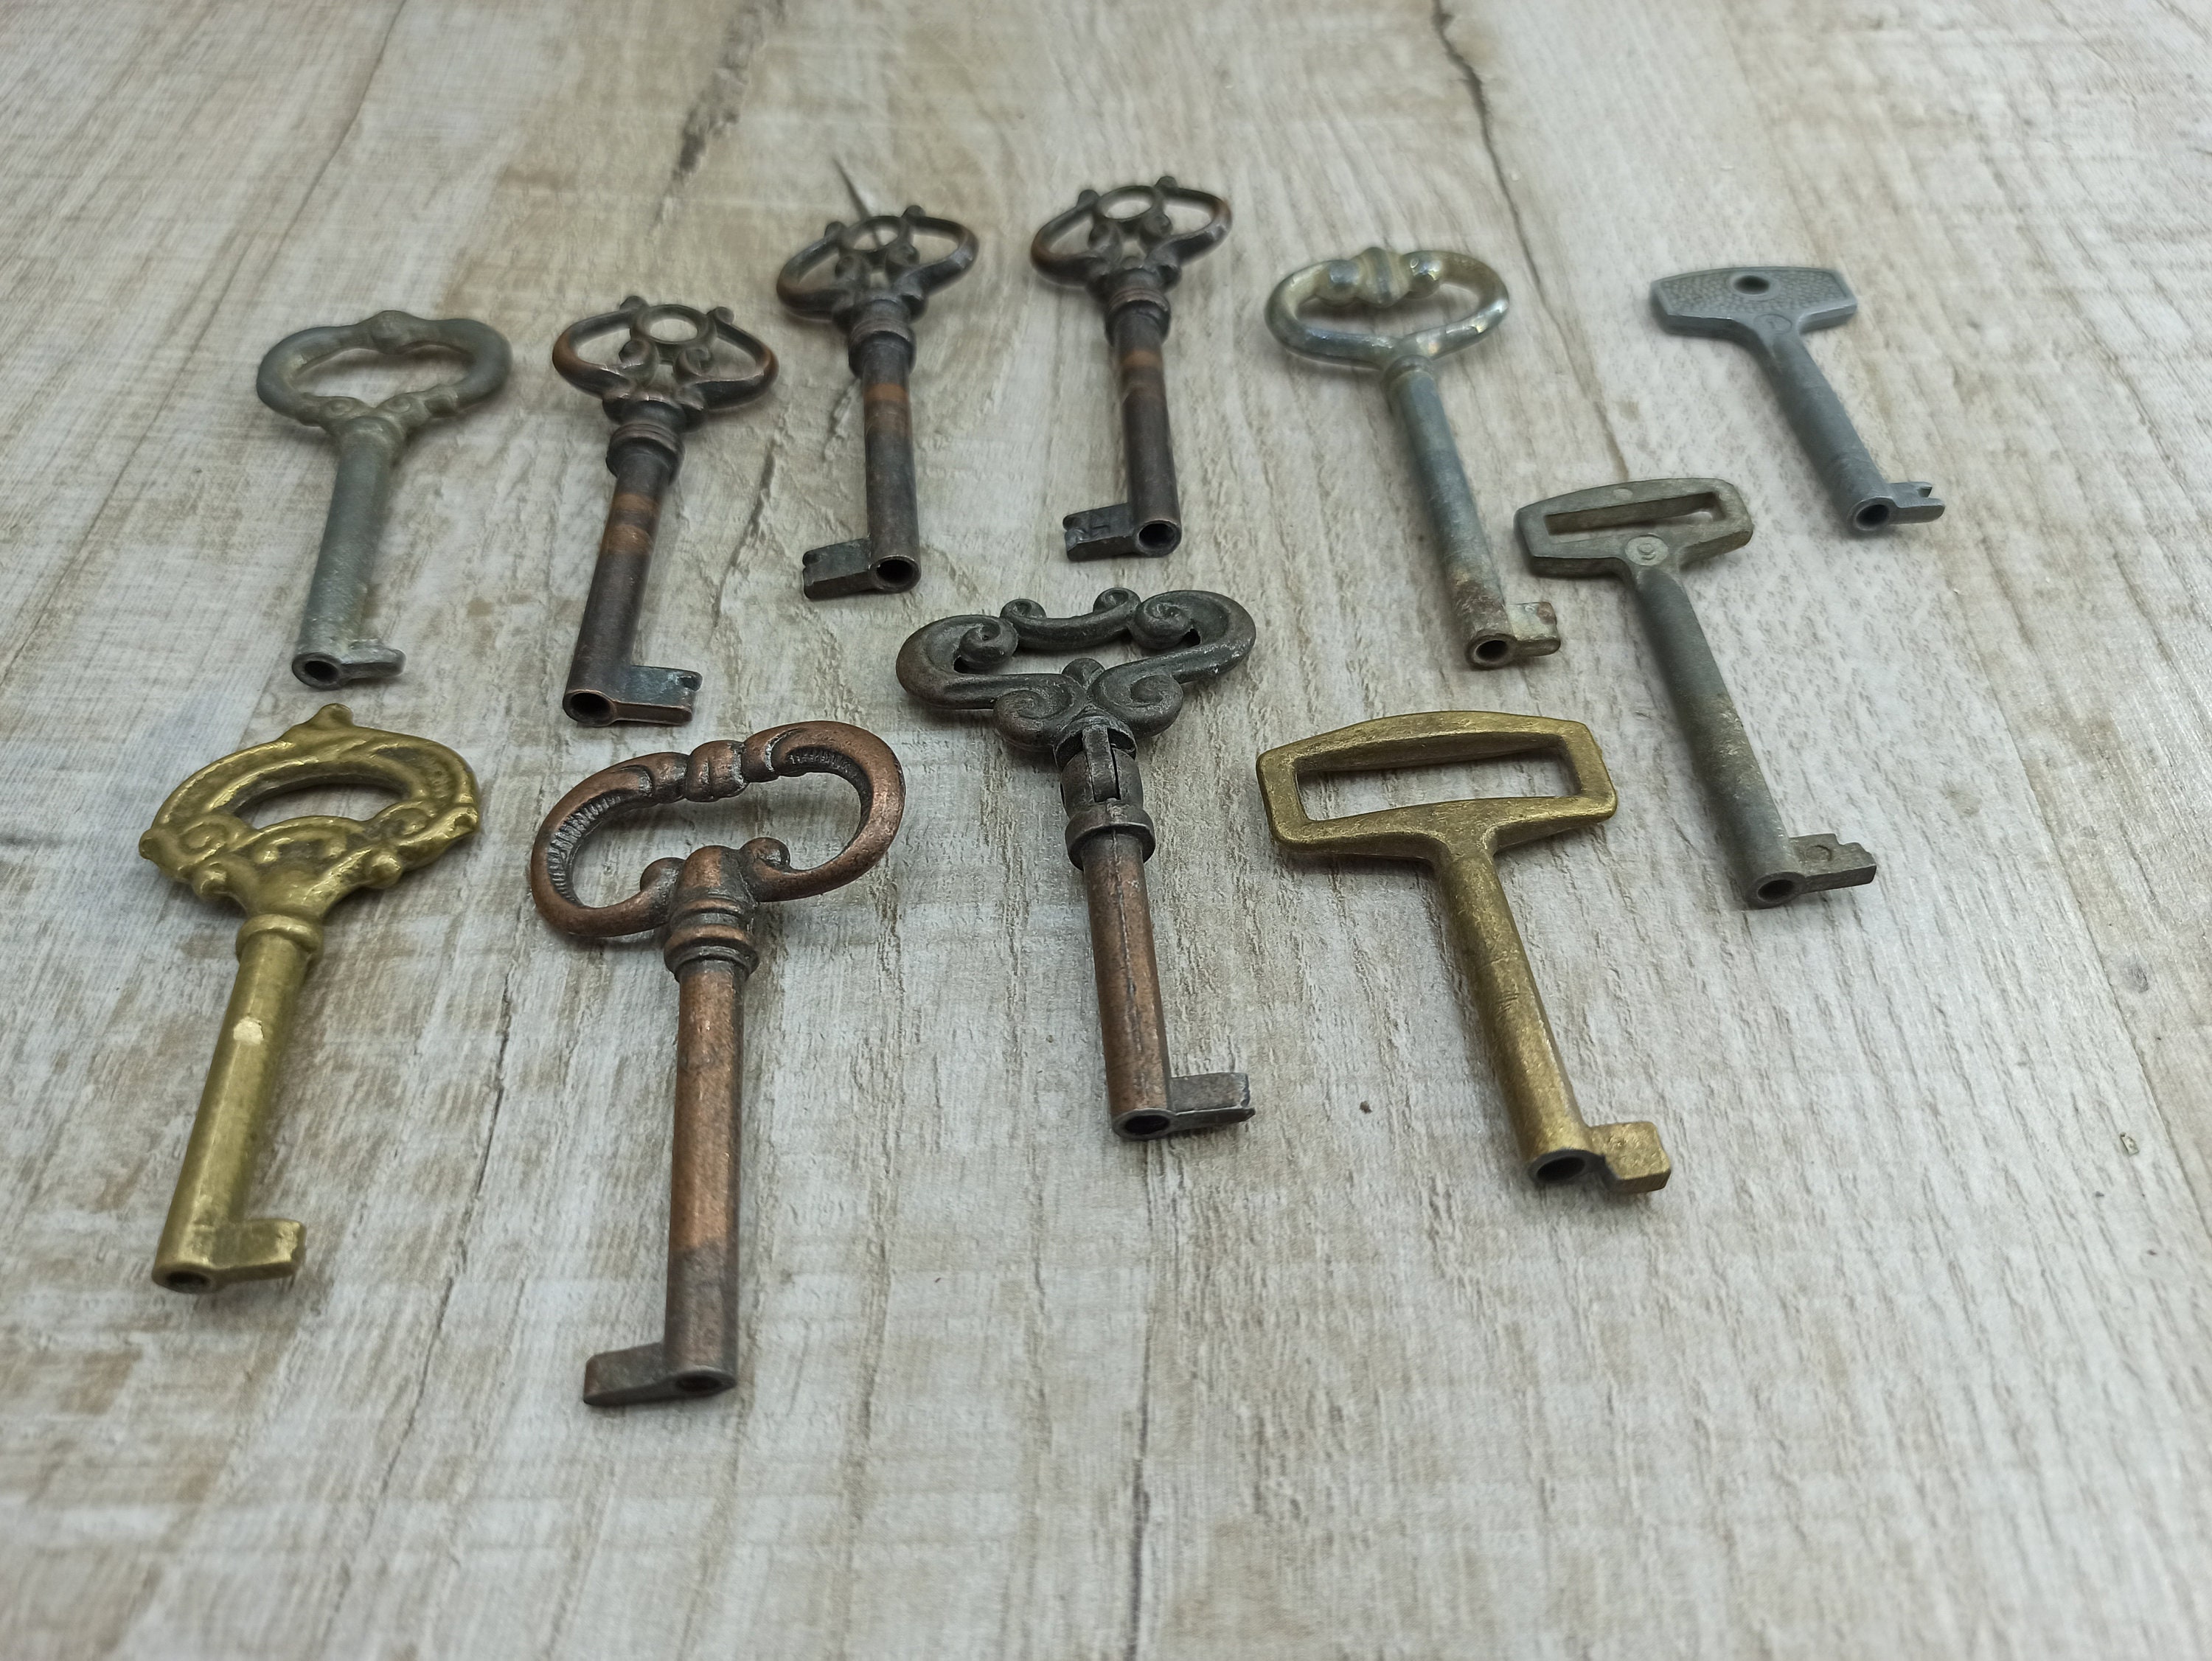 Vintage Keys Lot 6 Pcs. Wholesale Antique Keys for Craft and Decor